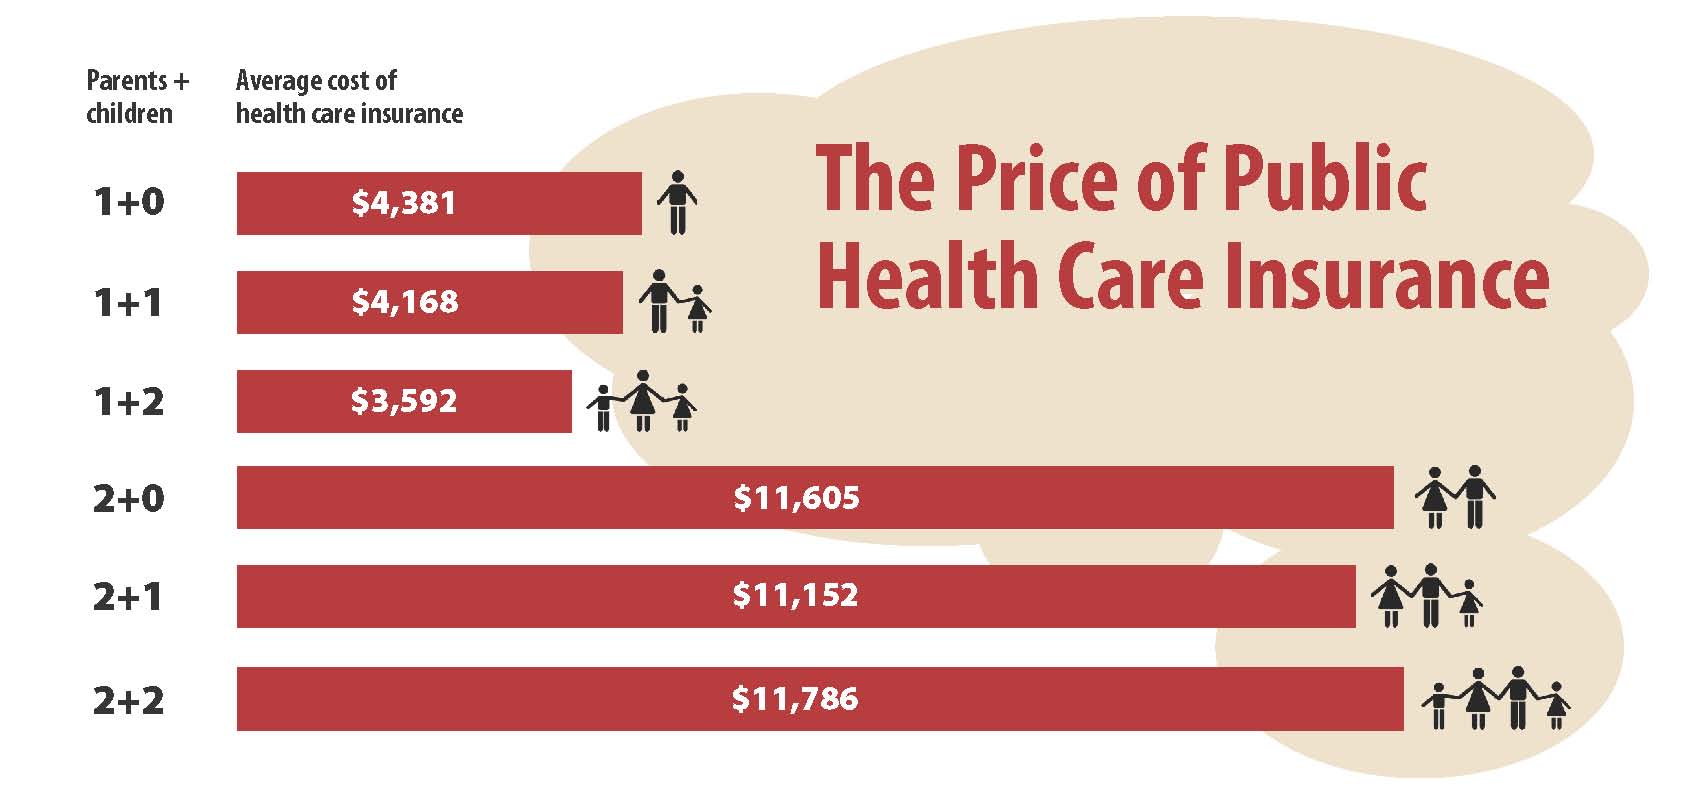 The Price of Public Health Care Insurance